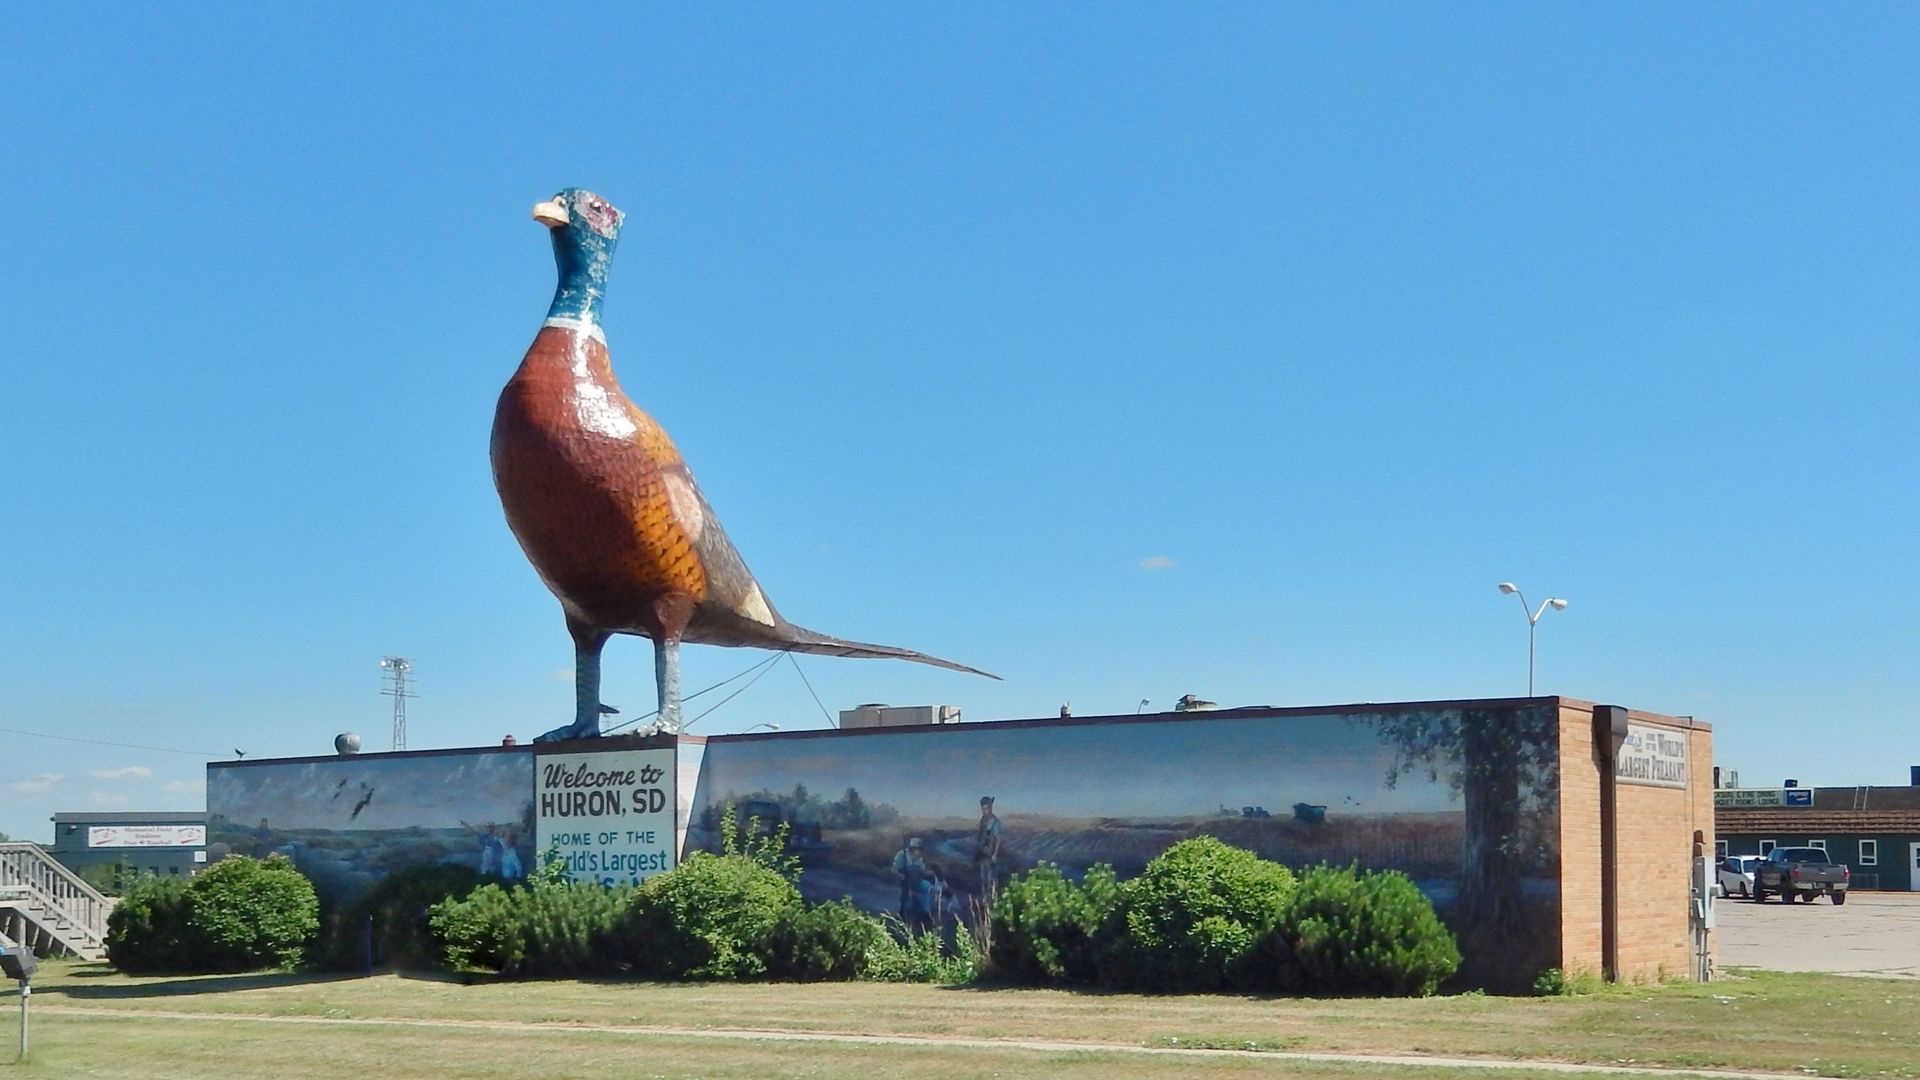 
World's Largest Pheasant Sculpture, world record in Huron, South Dakota